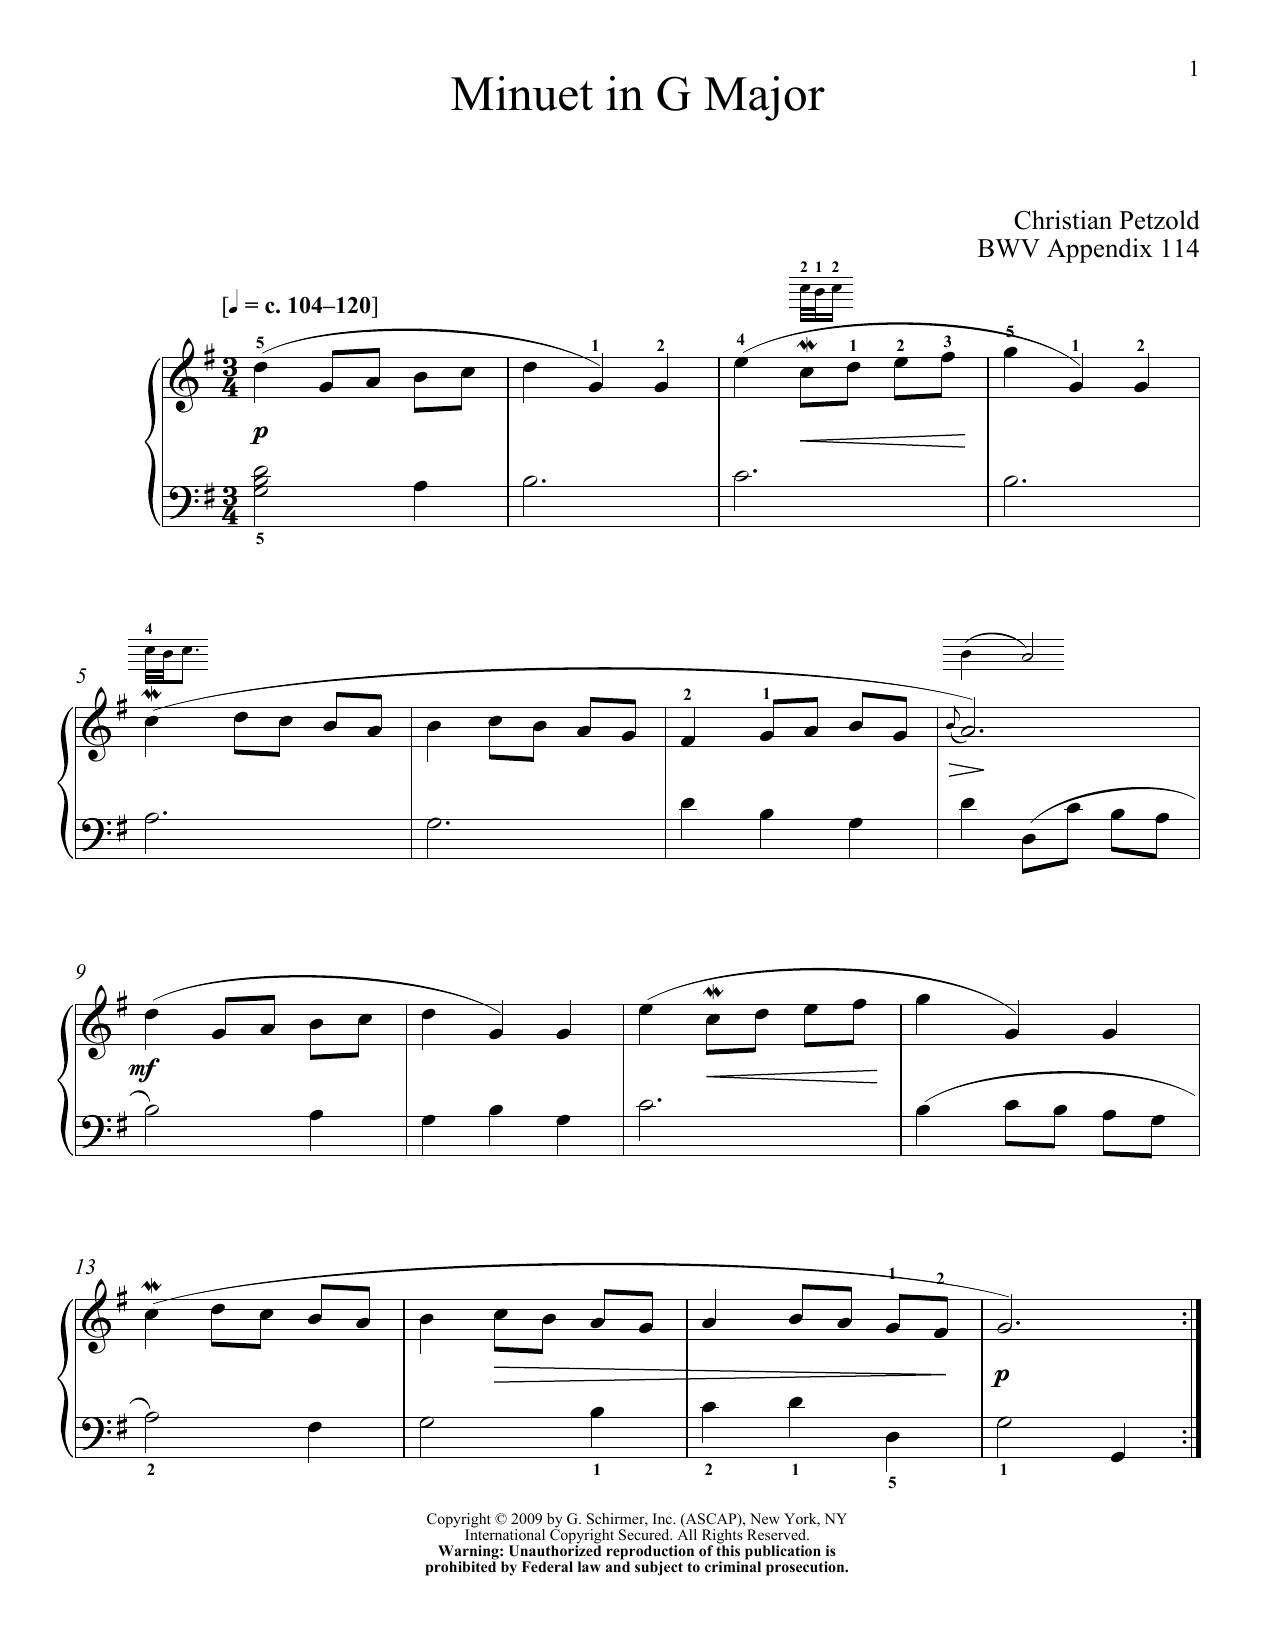 Johann Sebastian Bach Menuet In G Major, BWV App. 114 Sheet Music Notes & Chords for Piano - Download or Print PDF